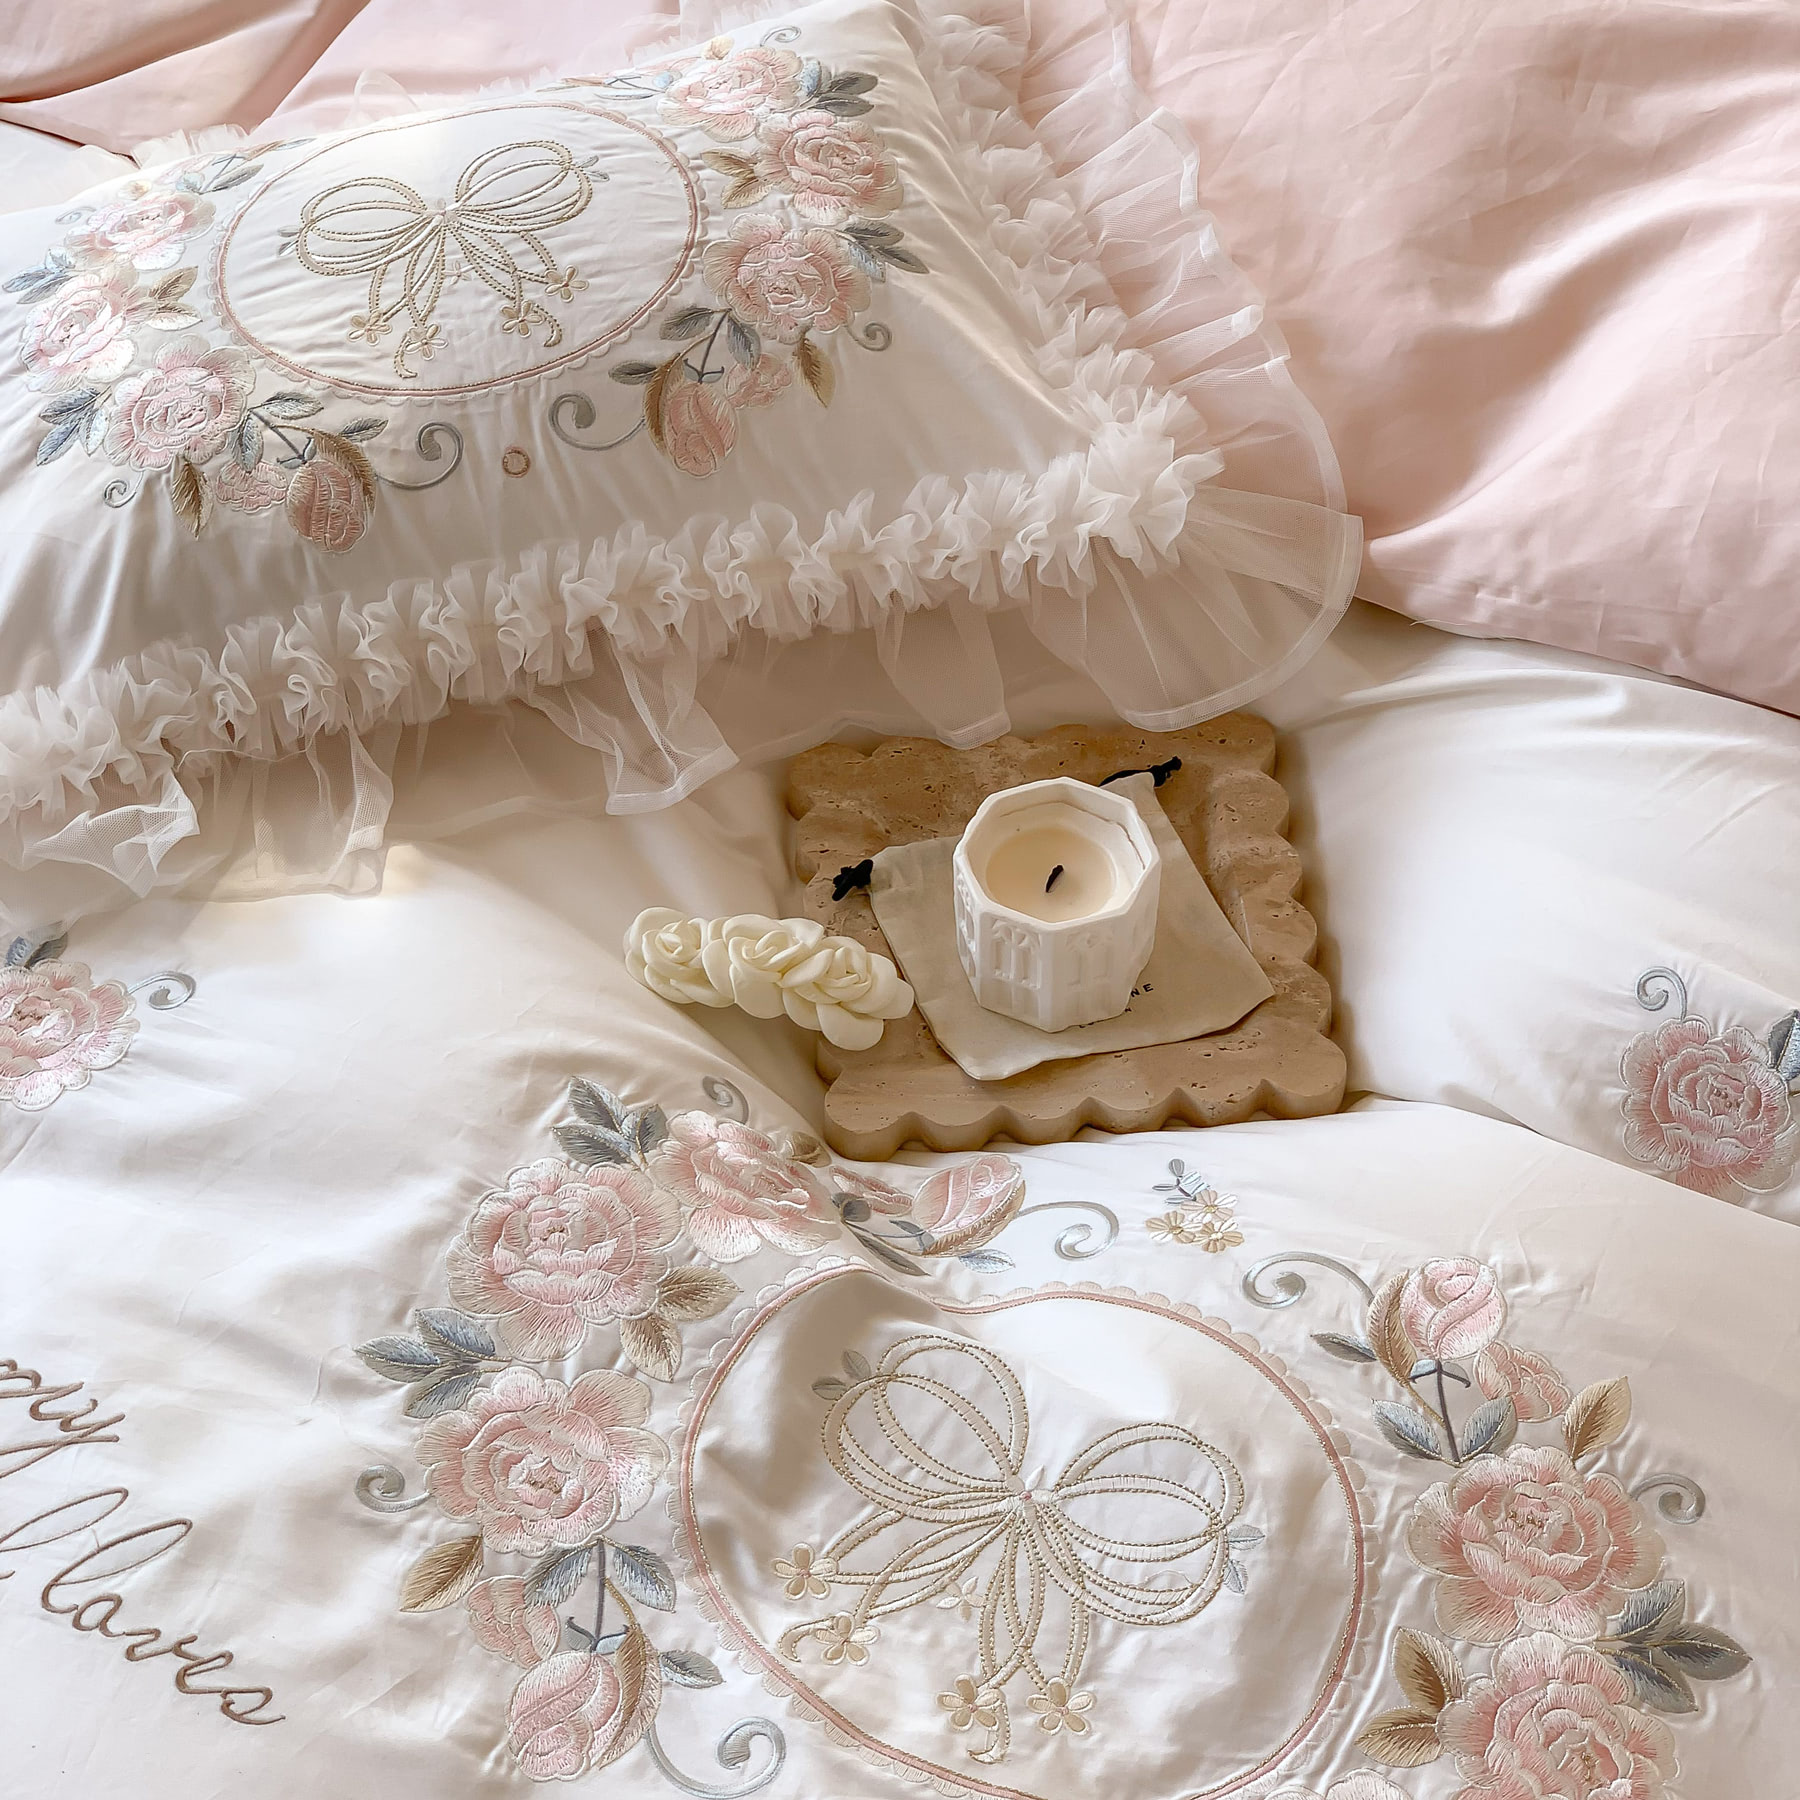 Aesthetic Embroidery Ruffle Duvet Cover Princess Bedding 4 Pcs Set05